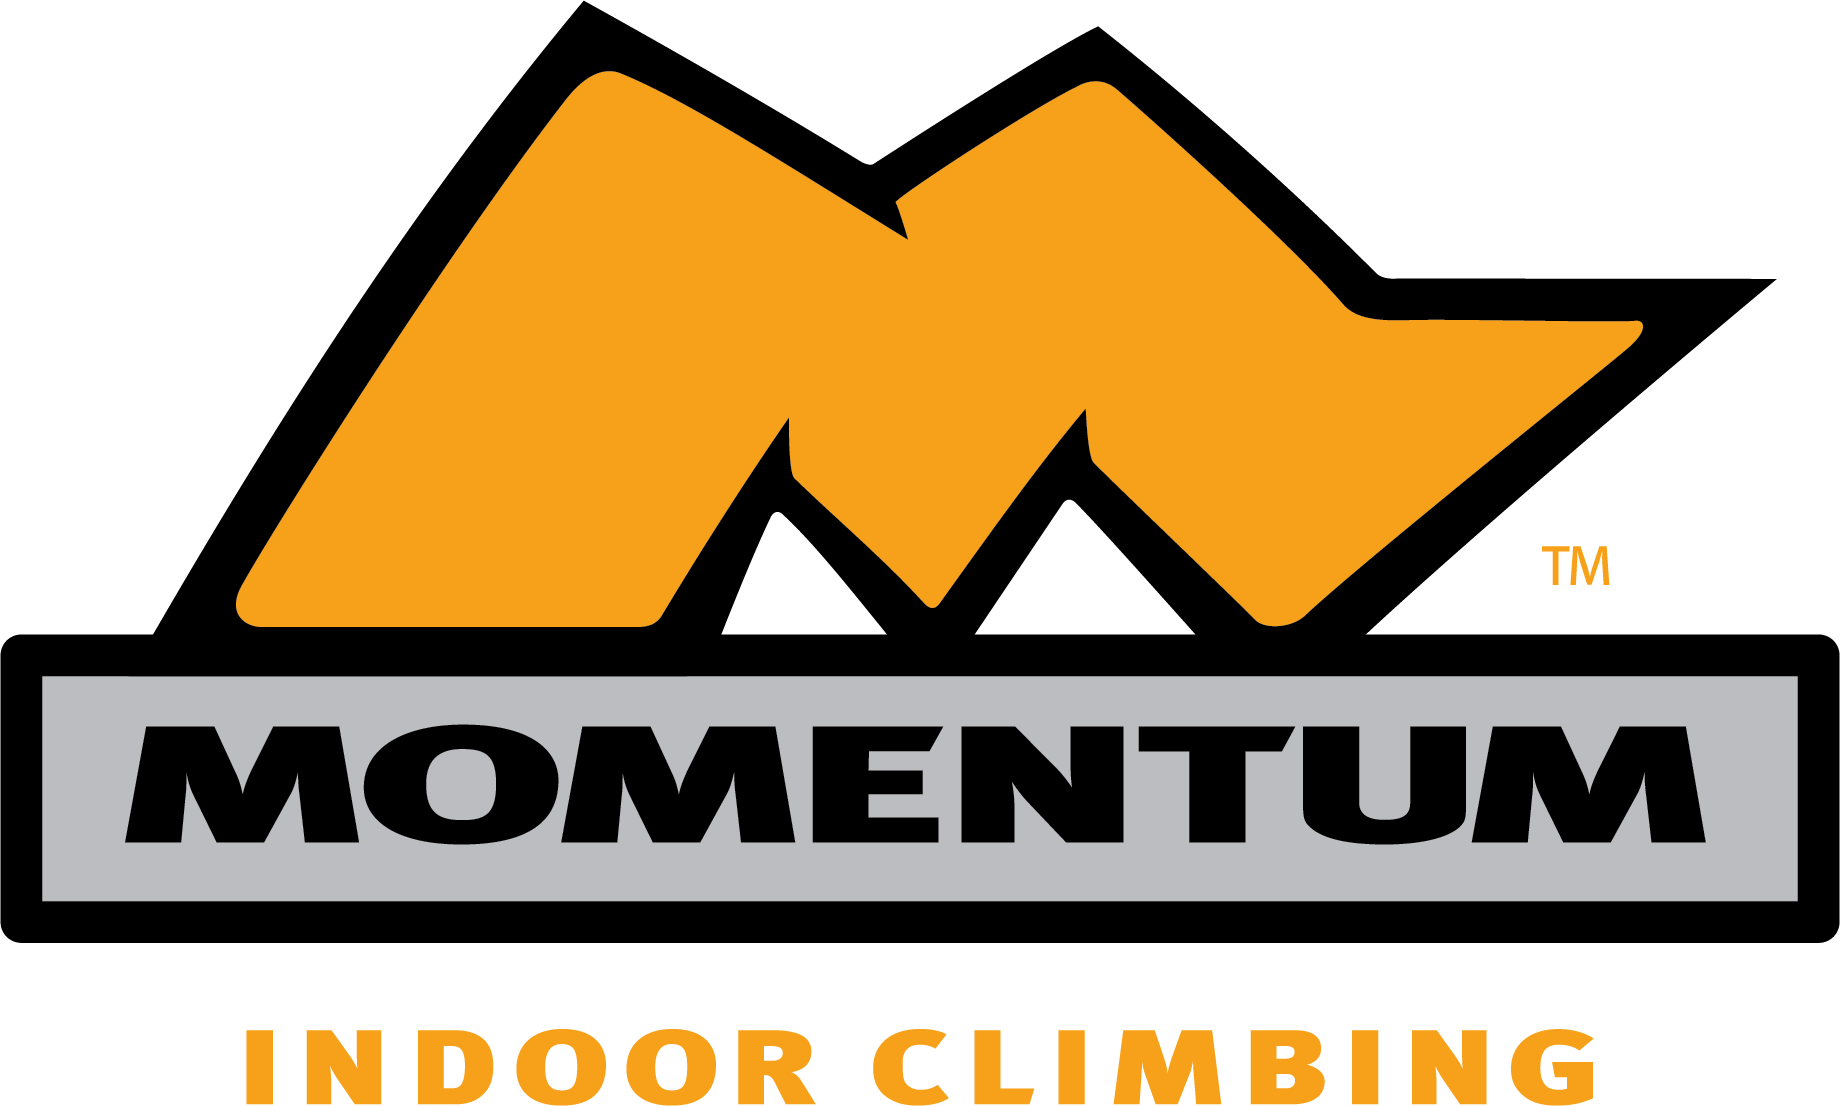 Image of Momentum Indoor Climbing logo